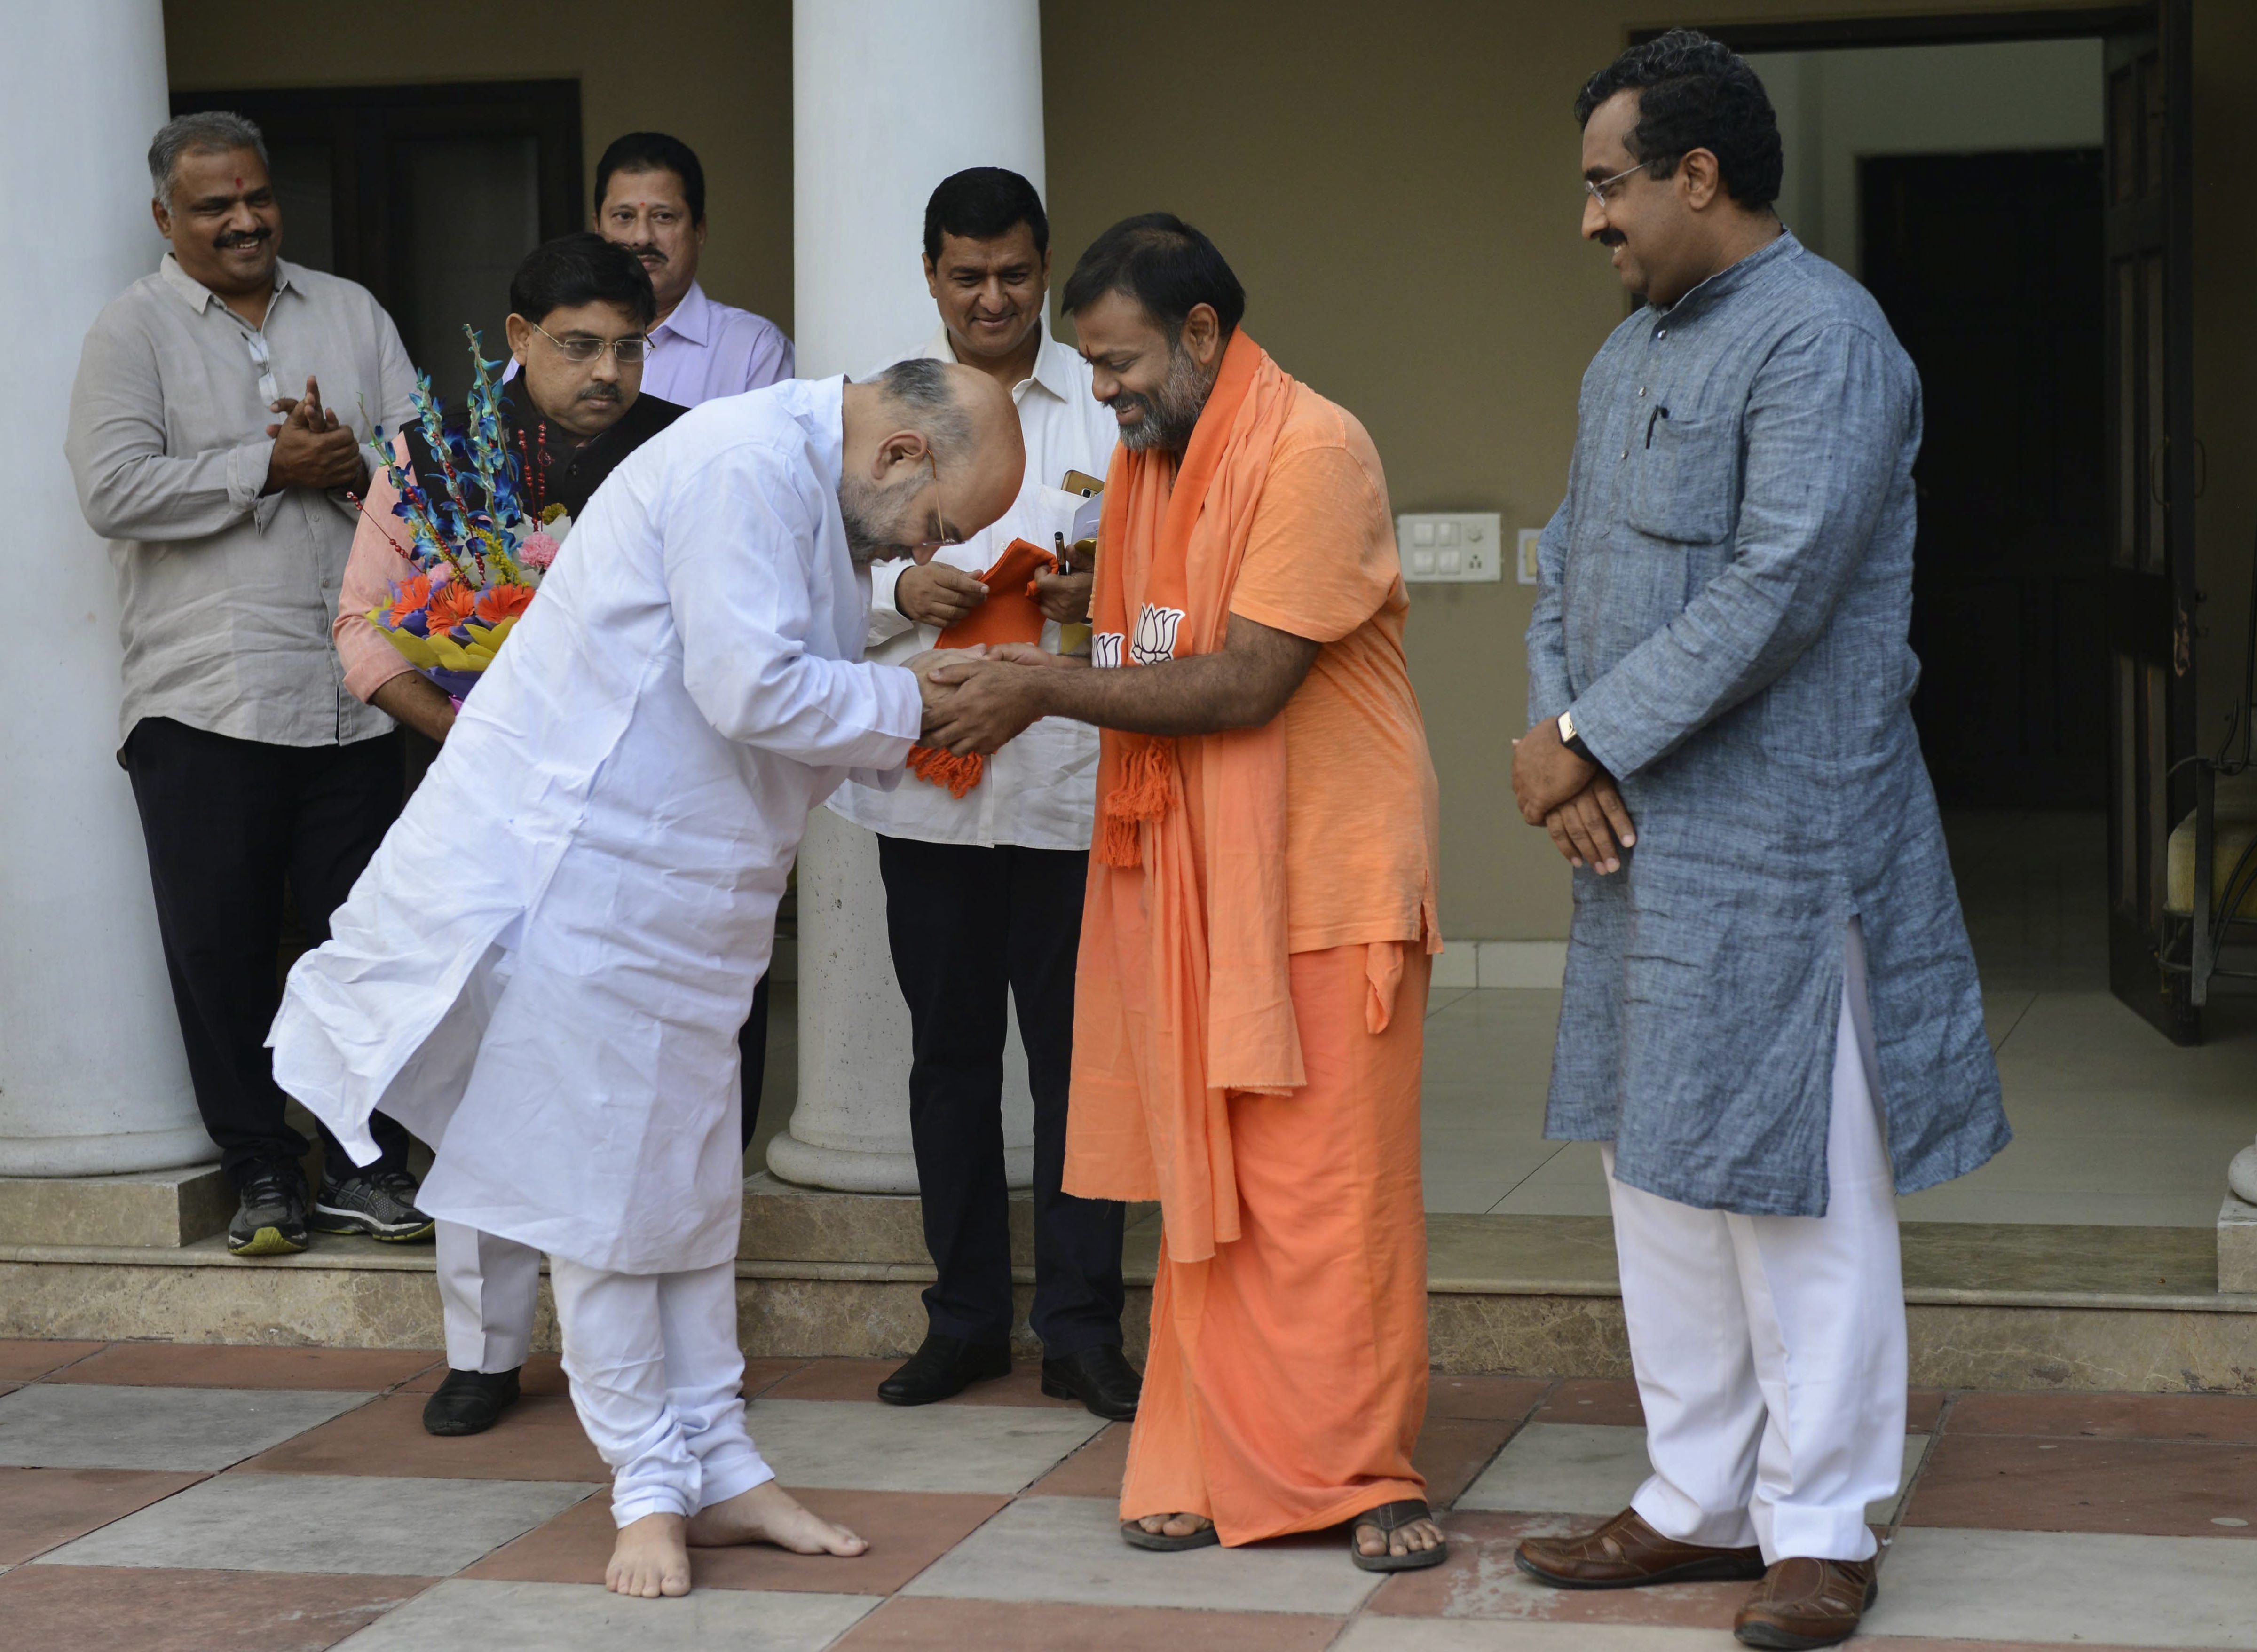 Swami Paripurnanand from Telangana joins Bharatiya Janata Party in presence of the party chief Amit Shah and Ram Madhav, in New Delhi - PTI